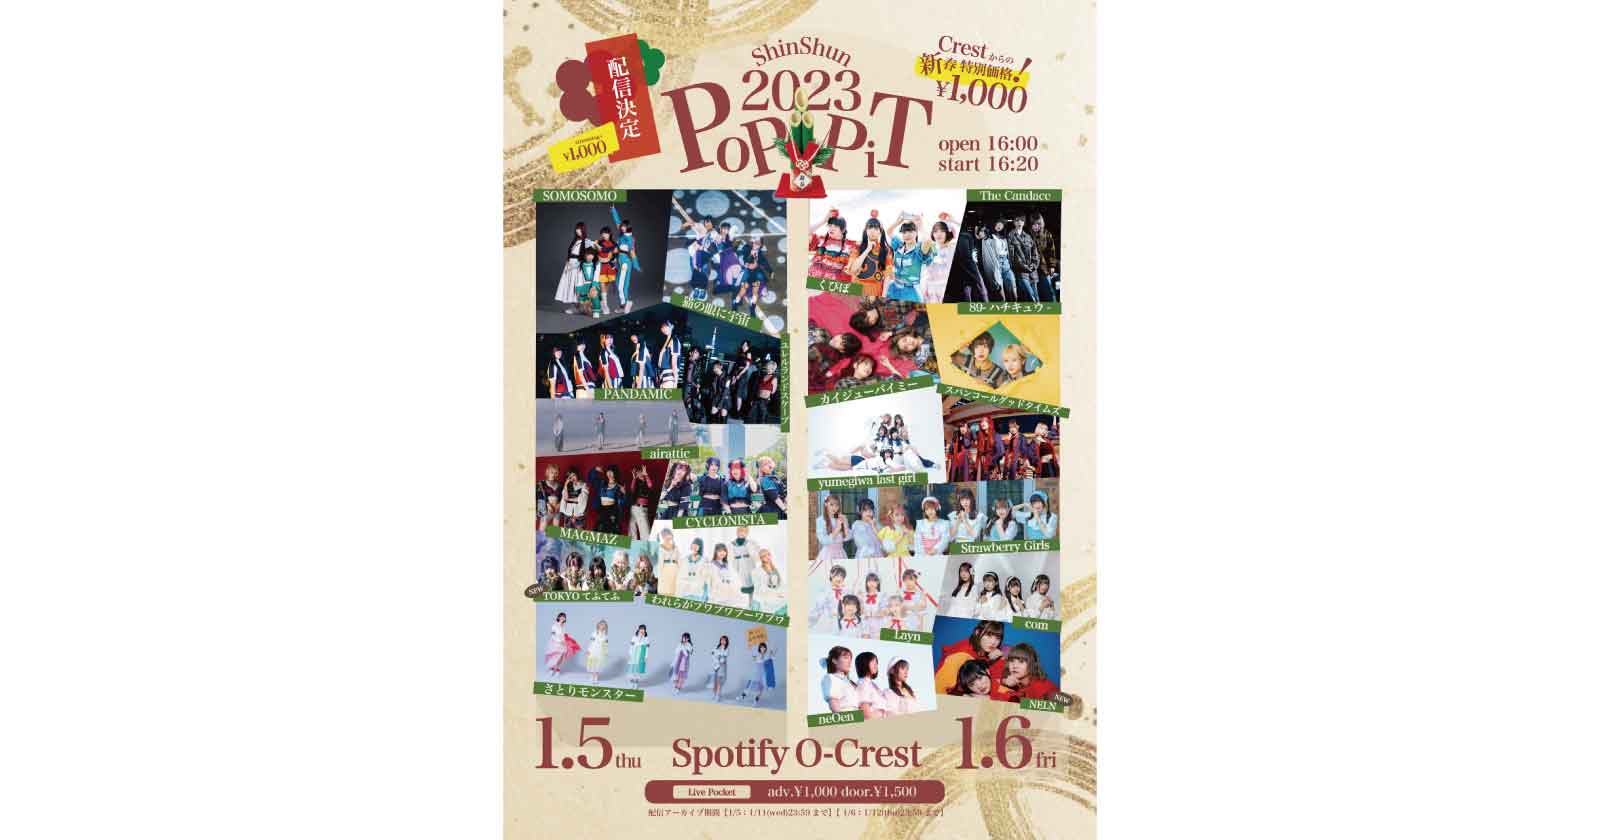 ShinShun PoPPiT_23/1/6 | Spotify O-EAST・O-WEST・O-Crest・O-nest